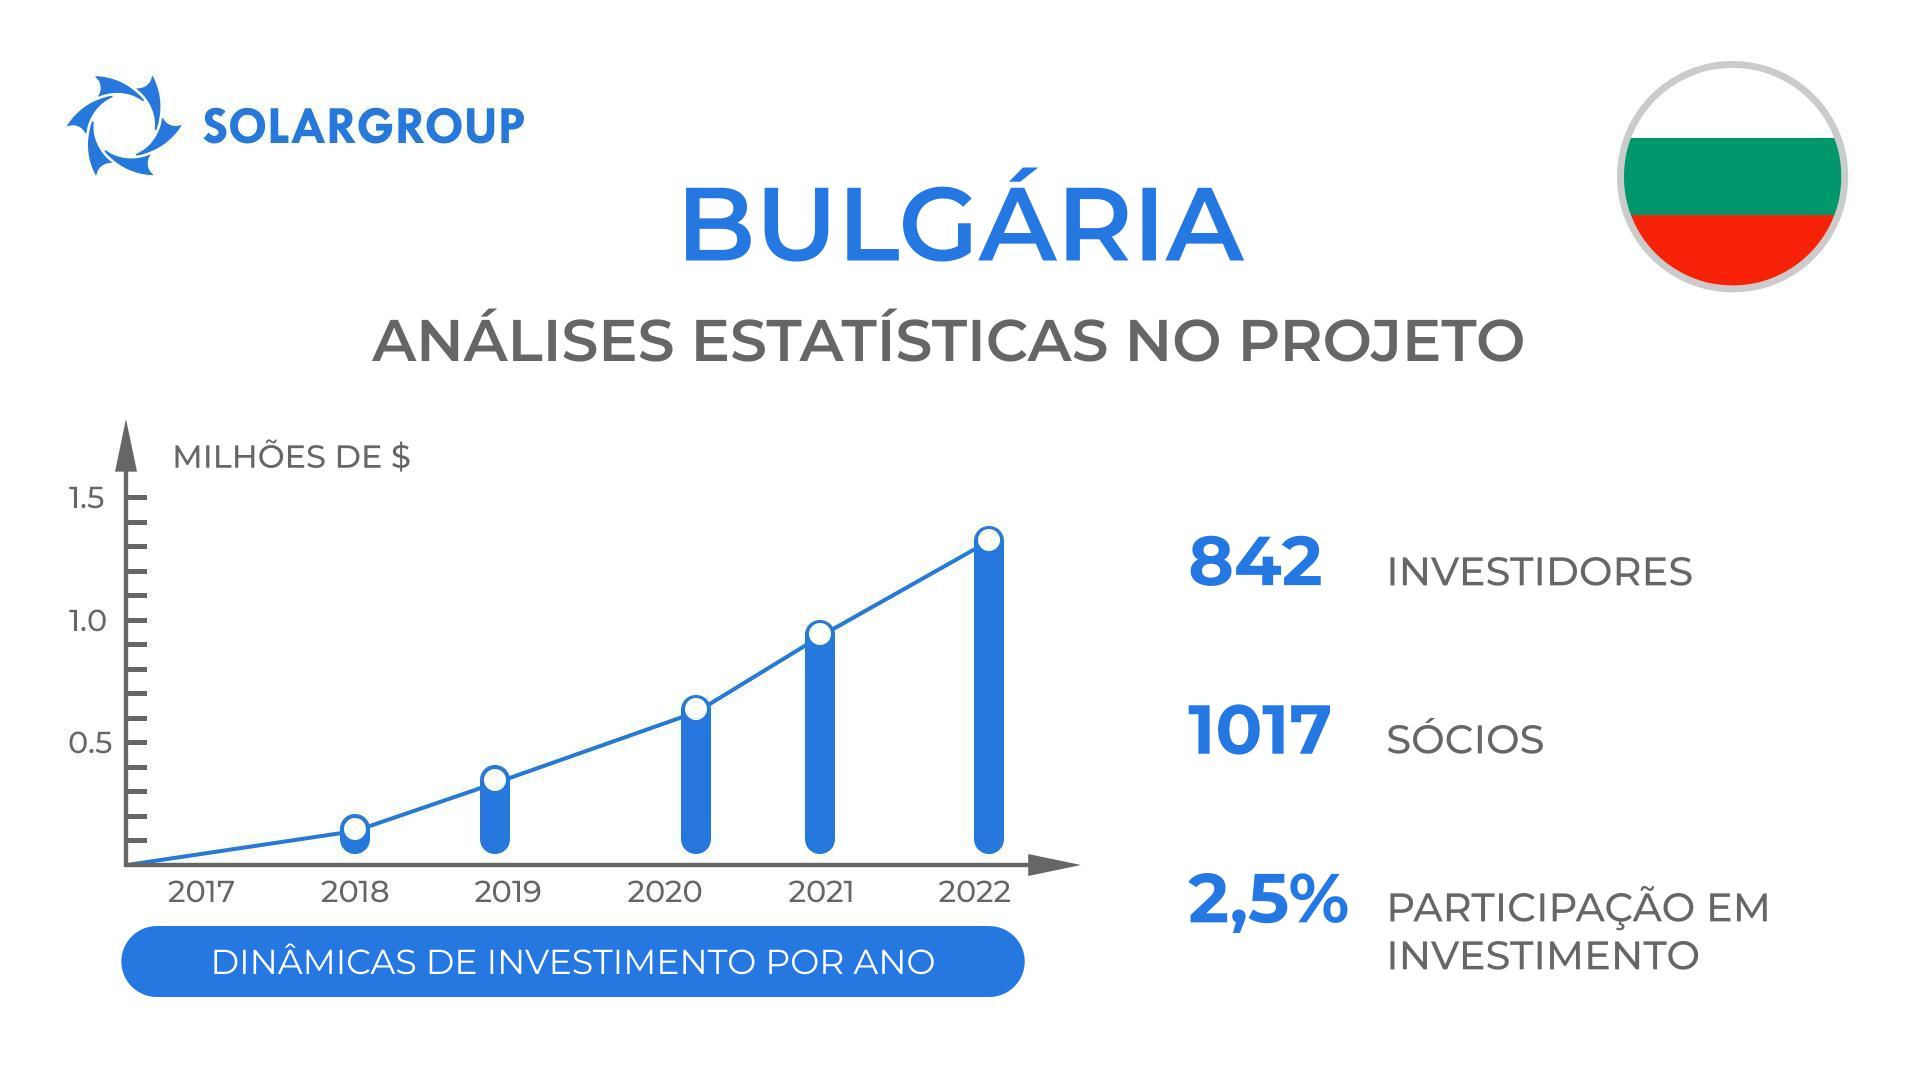 Envolvimento do país no projeto "Duyunov's motors": Bulgária